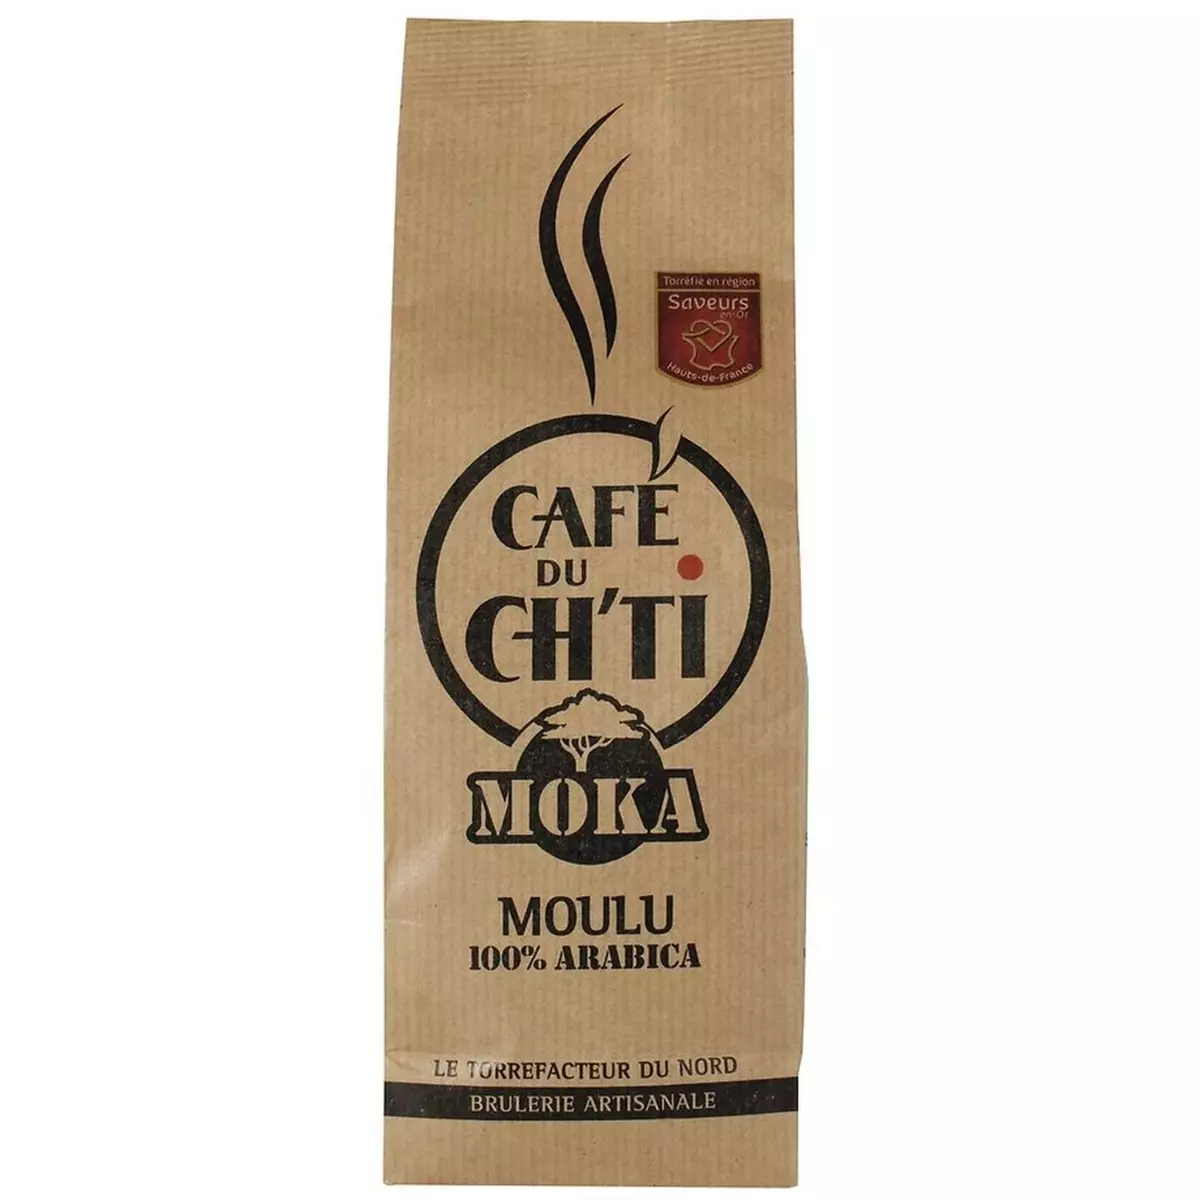 CAFÉ DU CH'TI Café moulu Moka pur arabica 250g